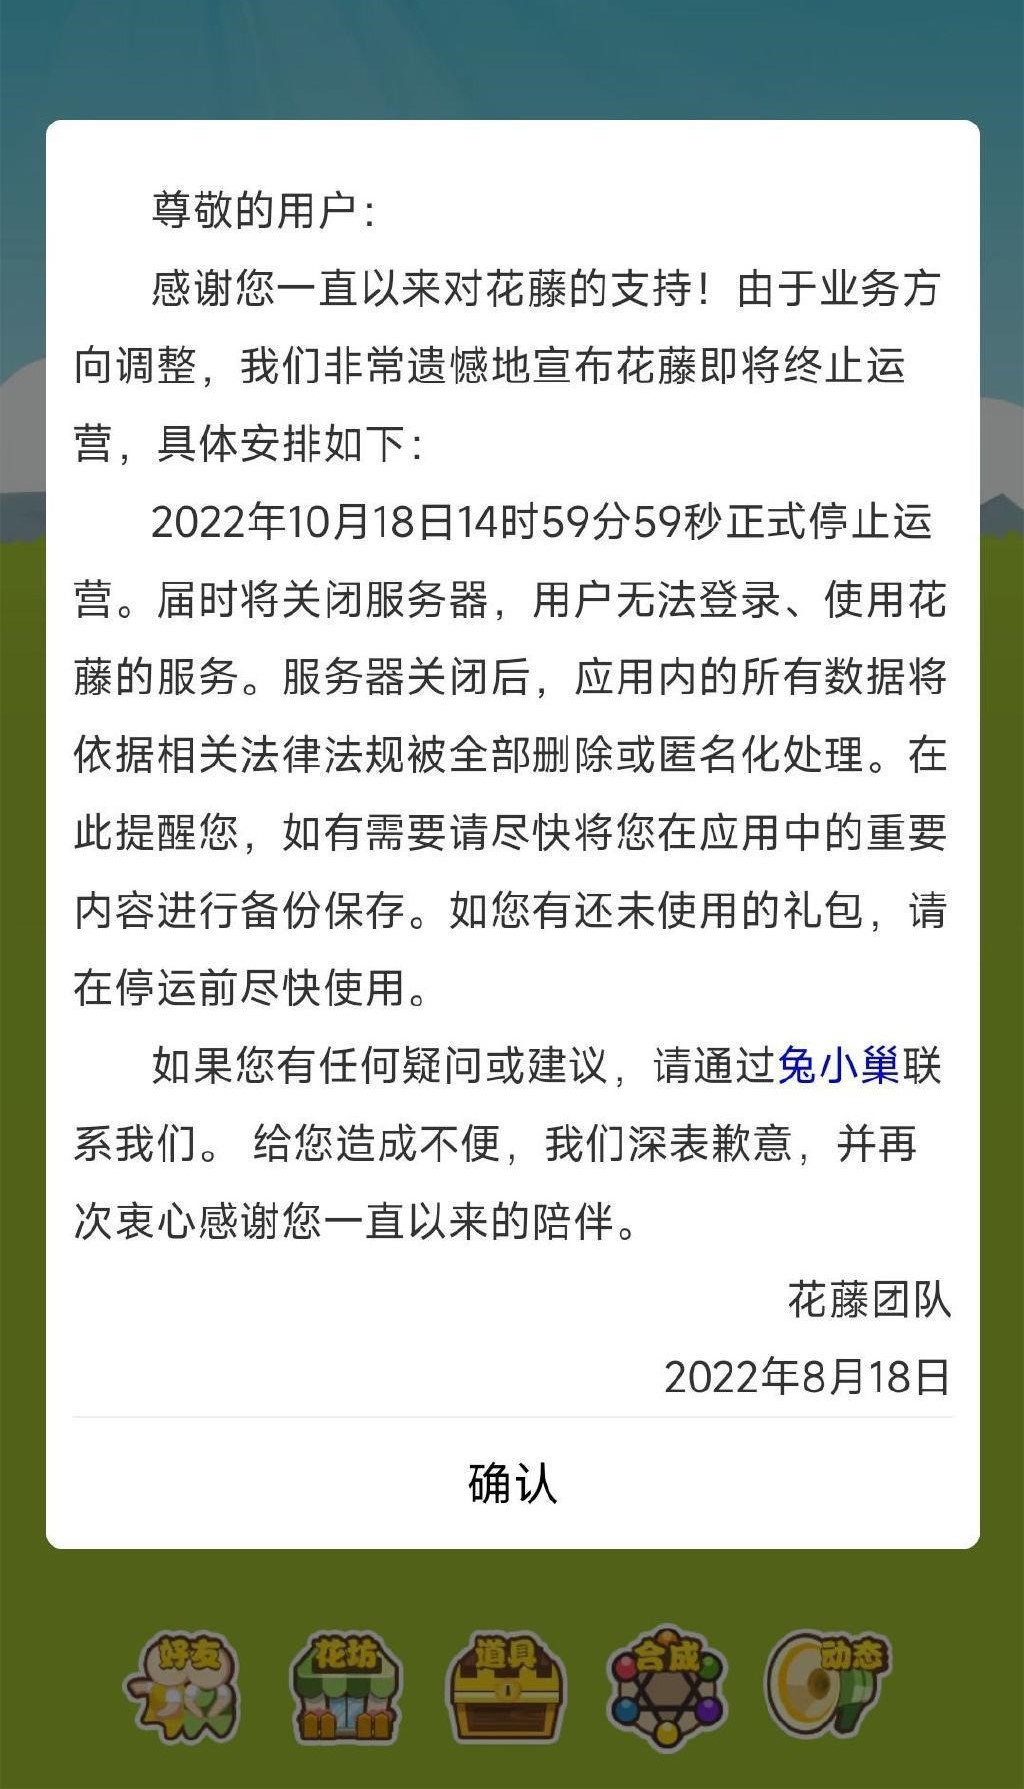 QQ空间花藤10月18日停运 所有数据将被清除